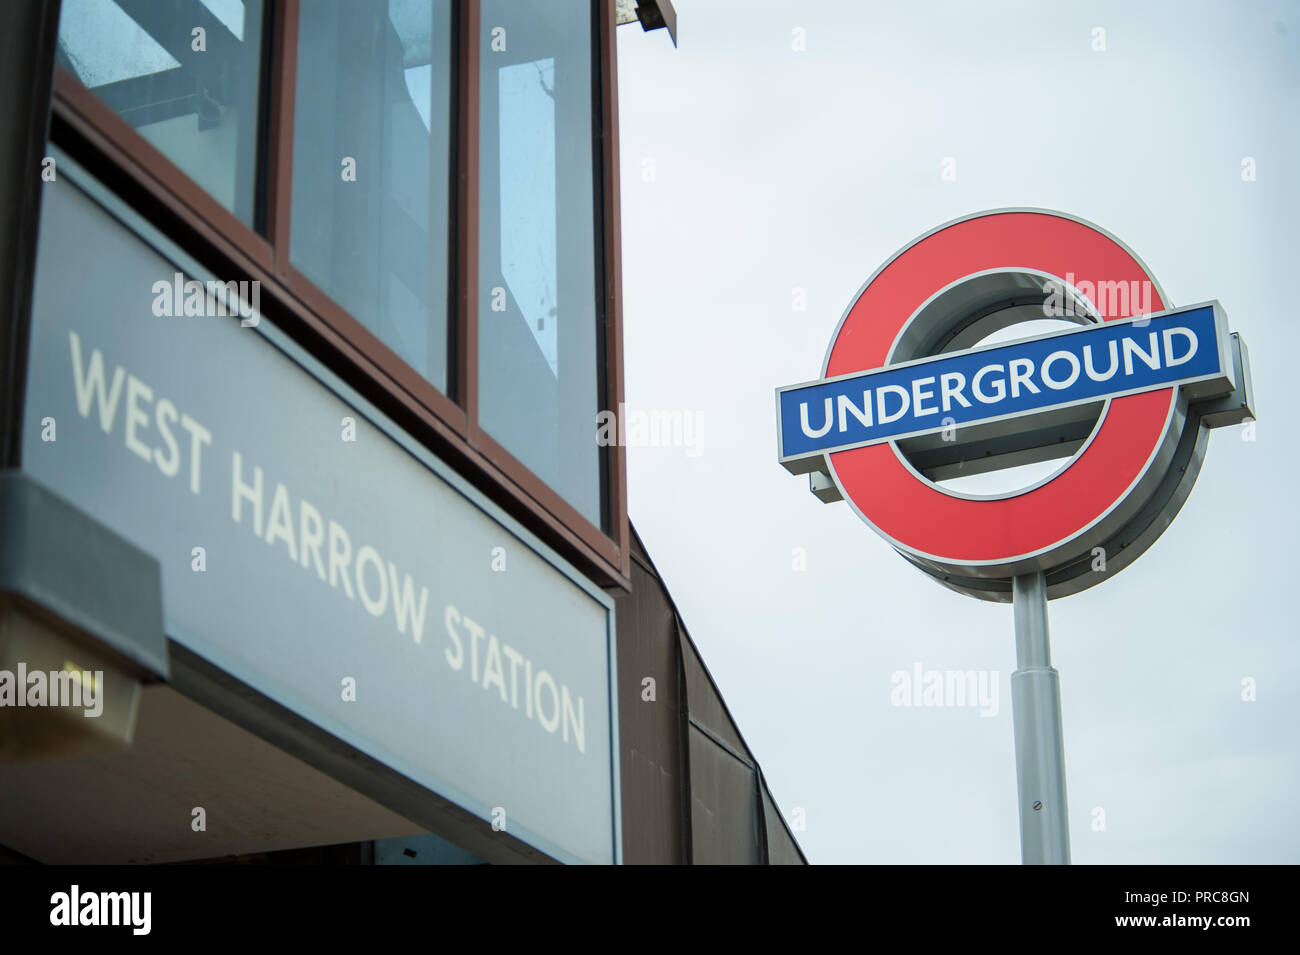 The West Harrow underground station Stock Photo